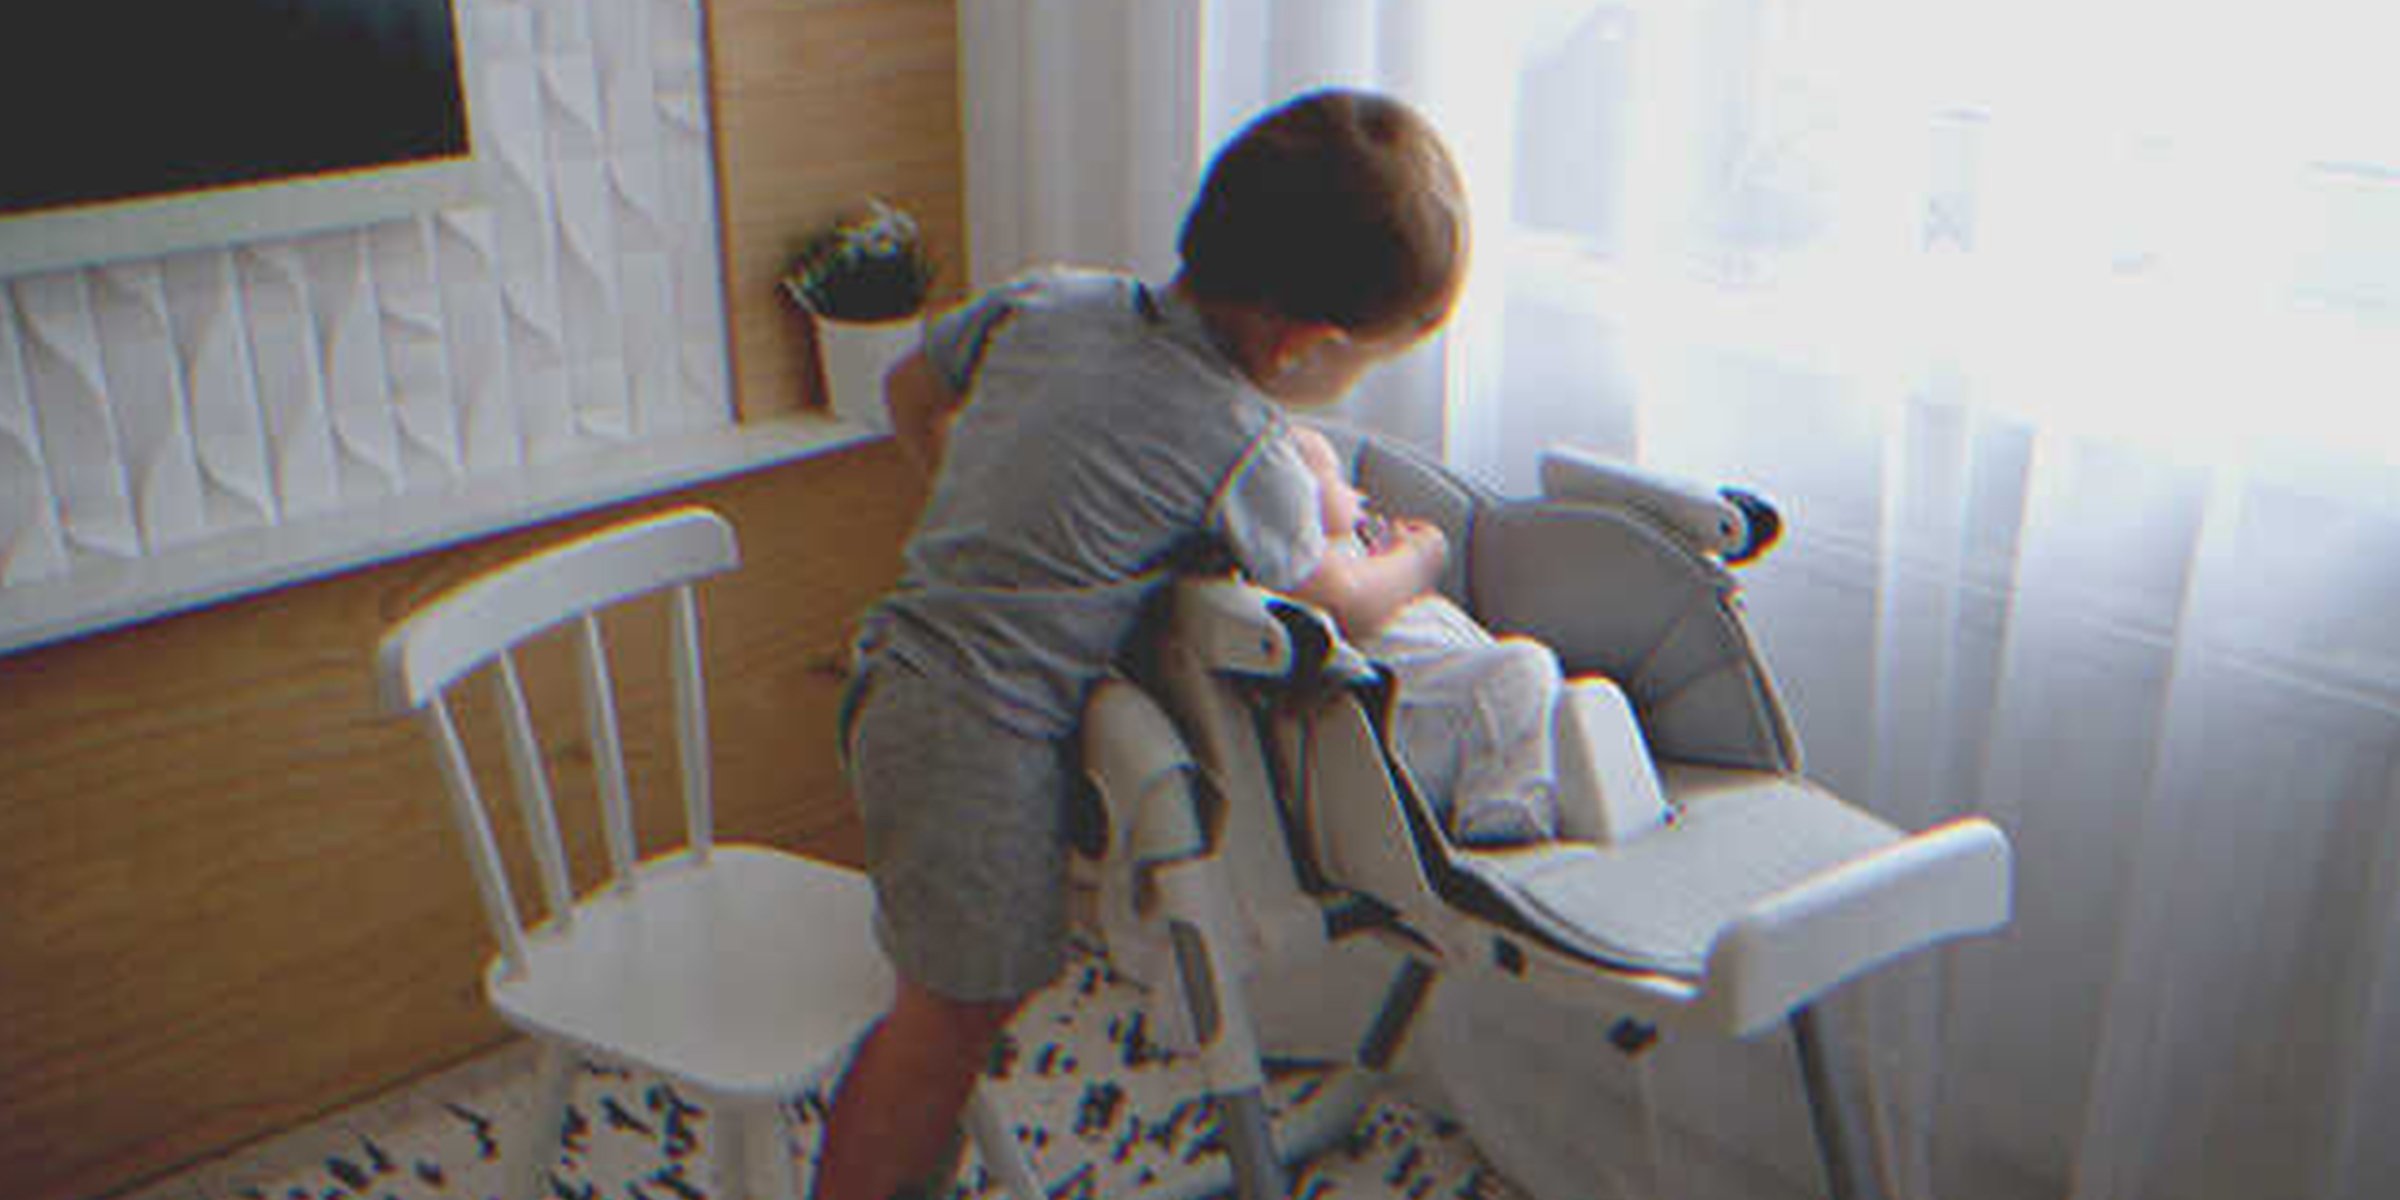 A little boy next to a baby | Source: Shutterstock